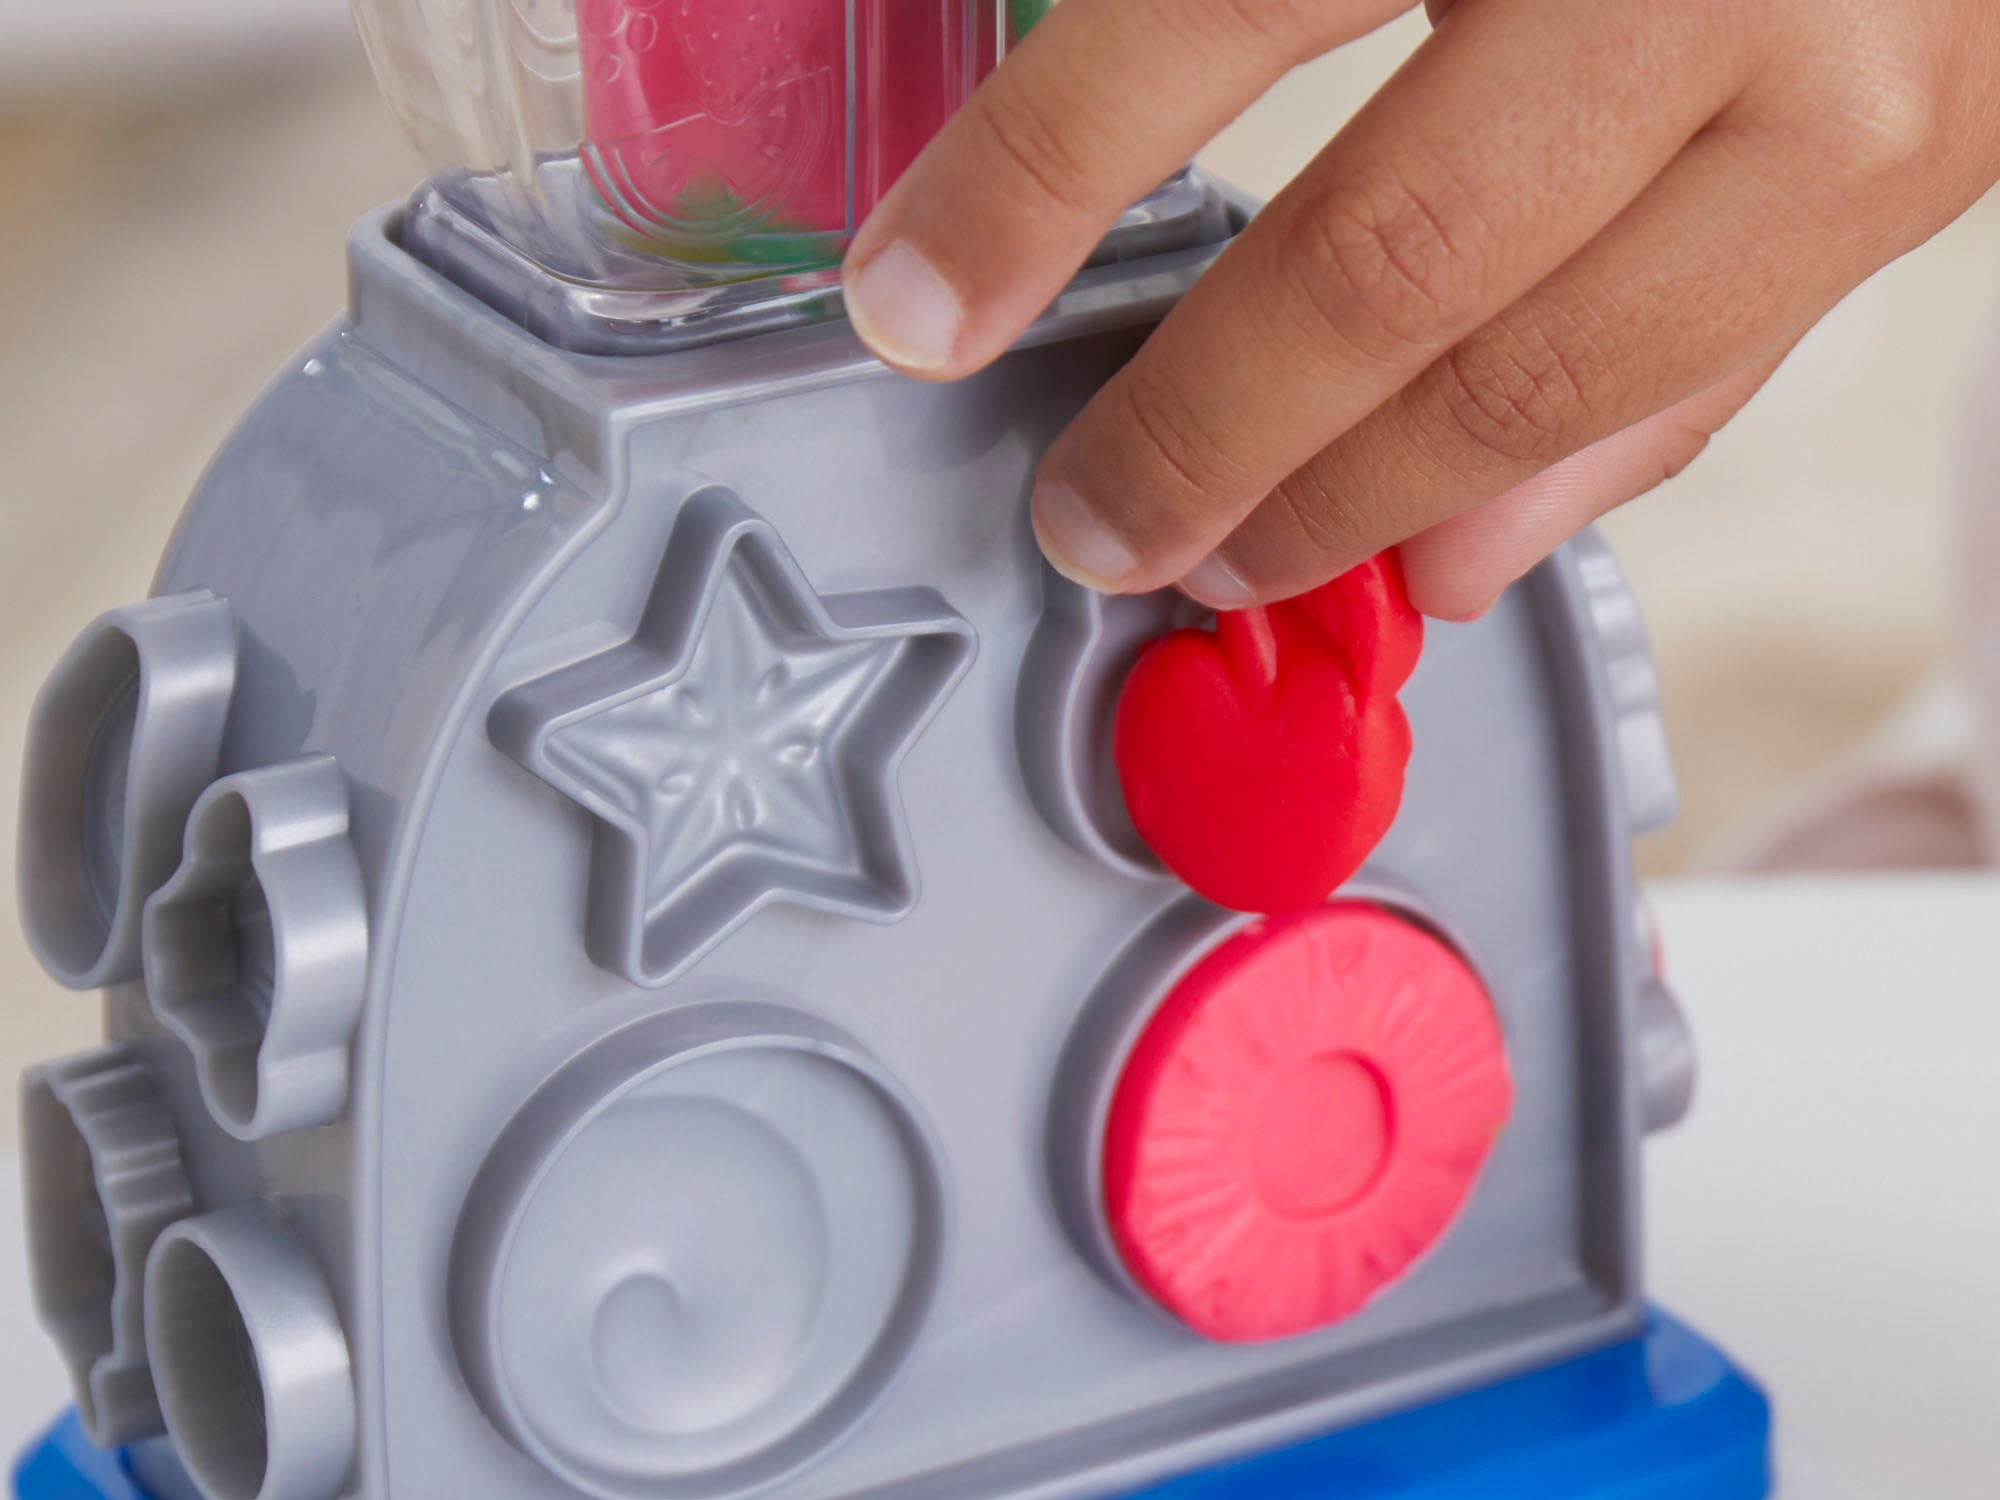 Hasbro Knete »Play-Doh, Smoothie-Mixer«